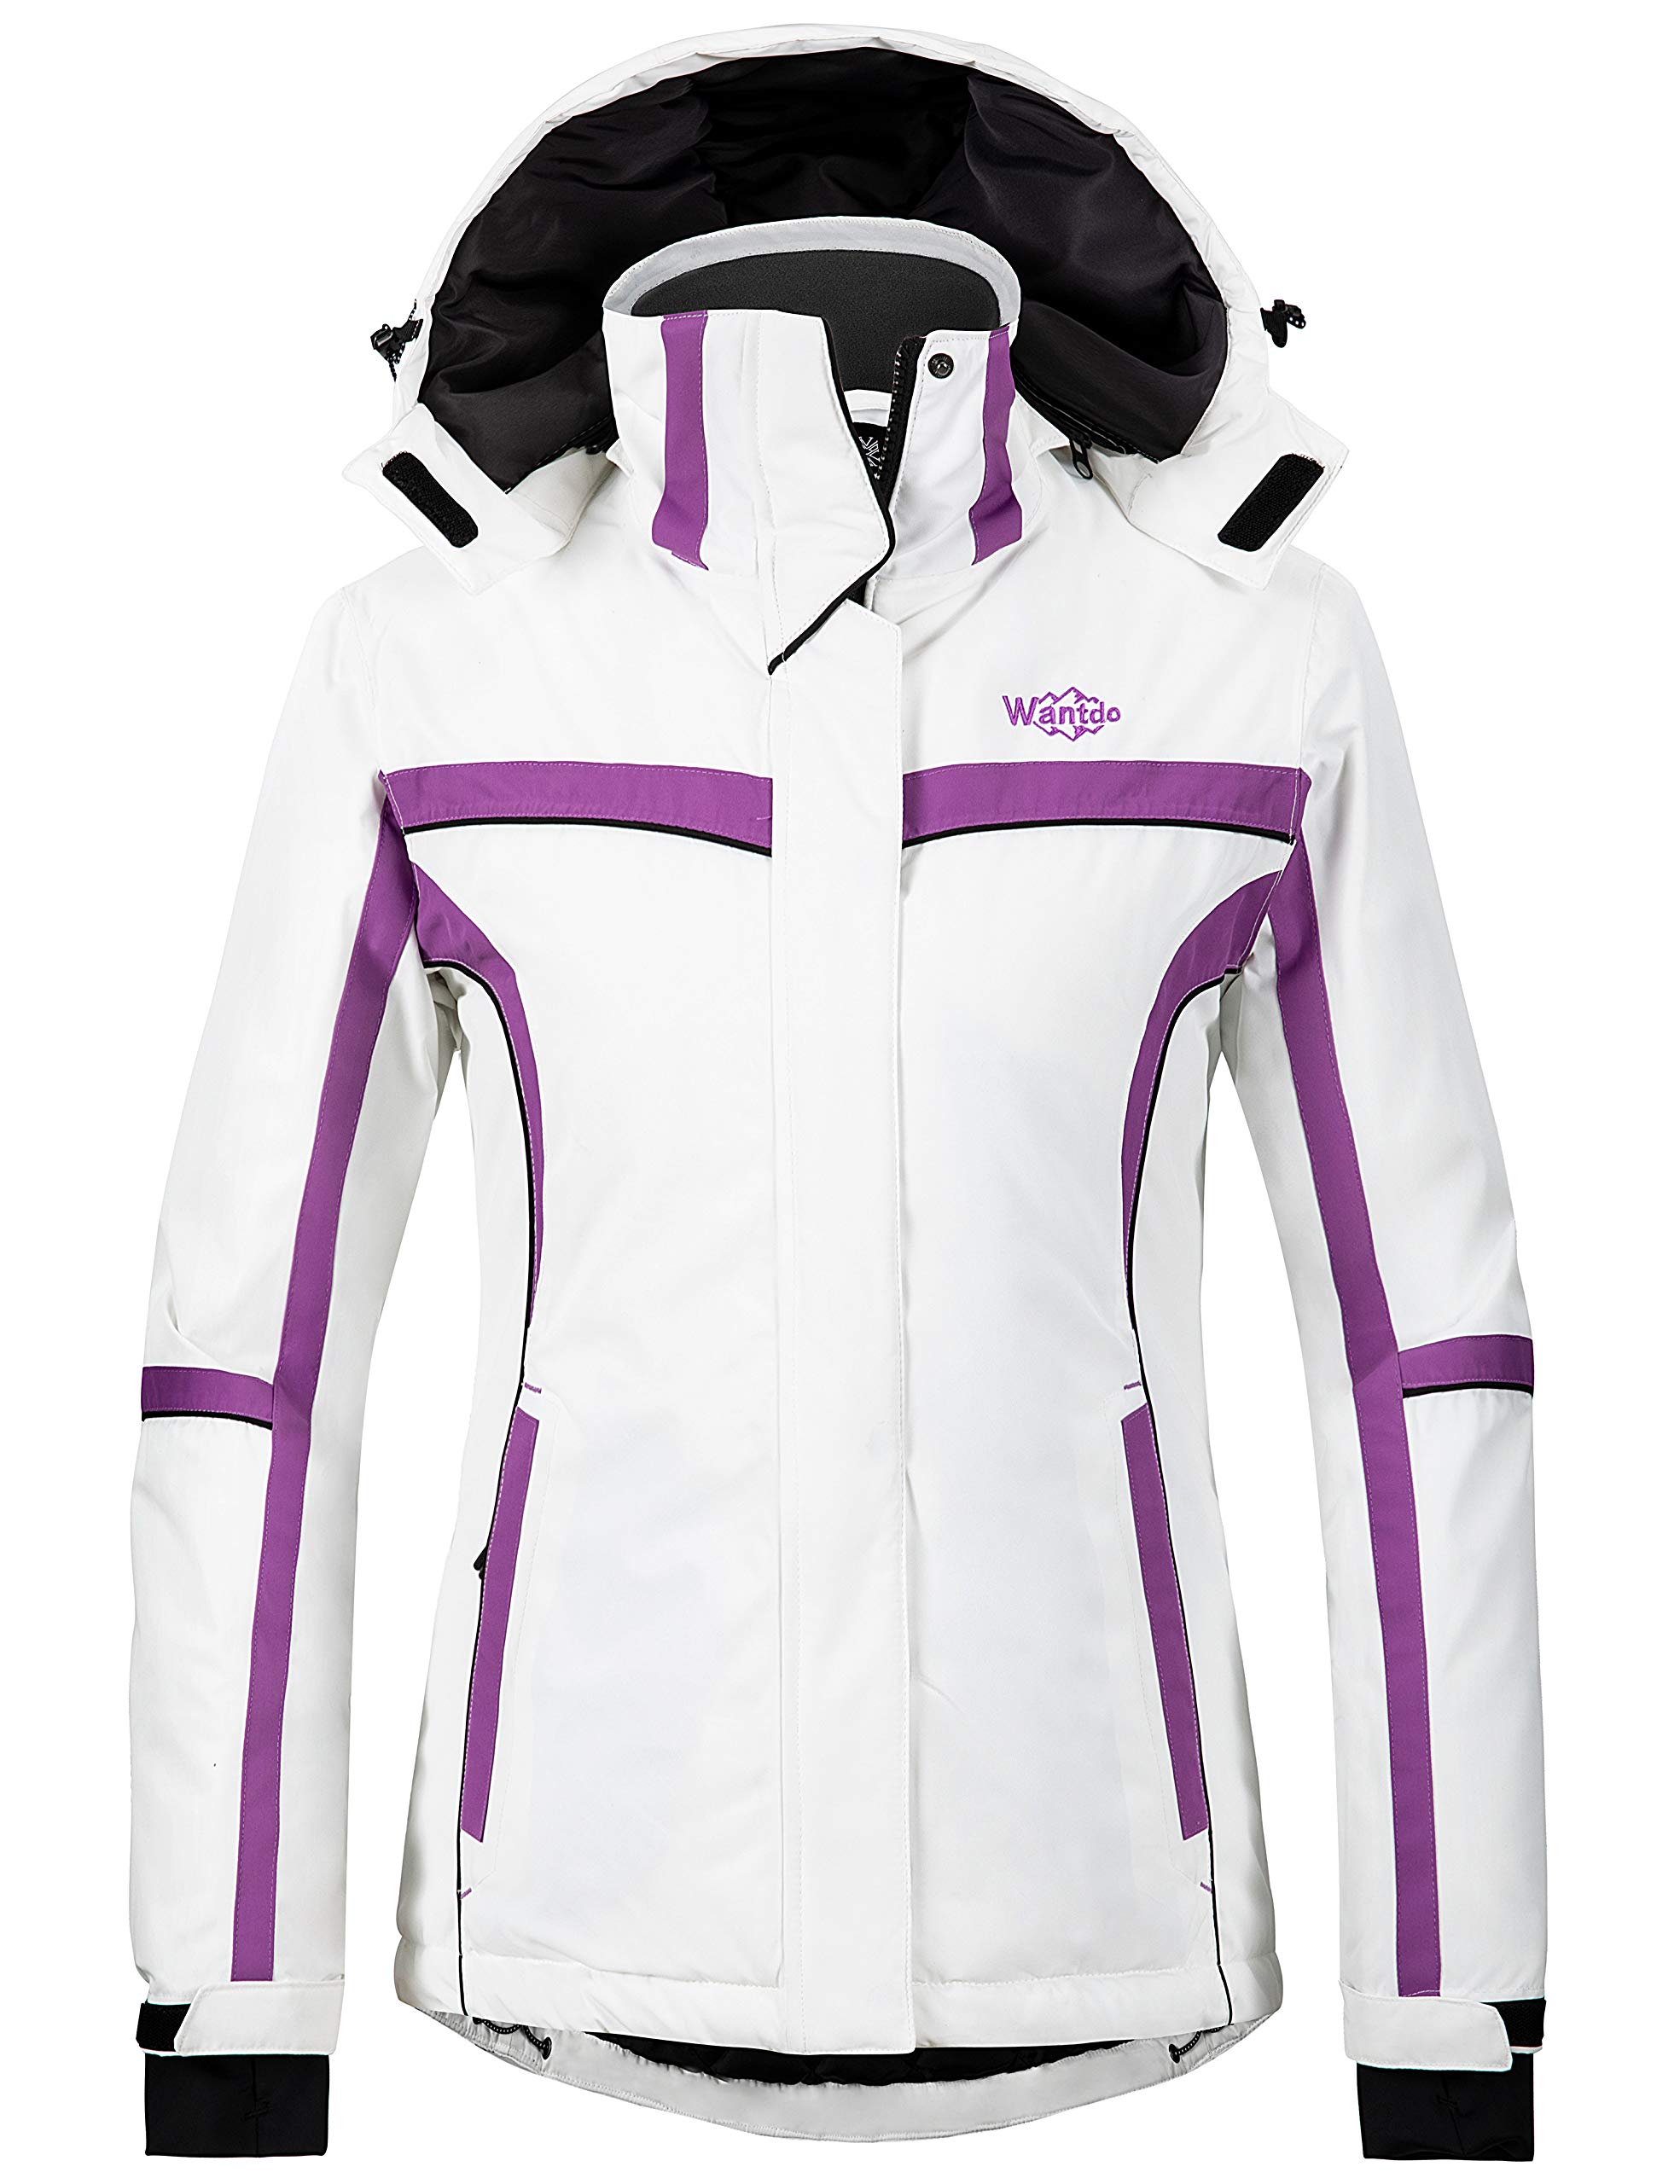 Wantdo Women's Winter Printed Waterproof Ski Jacket Raincoat with Hood White L - image 1 of 3